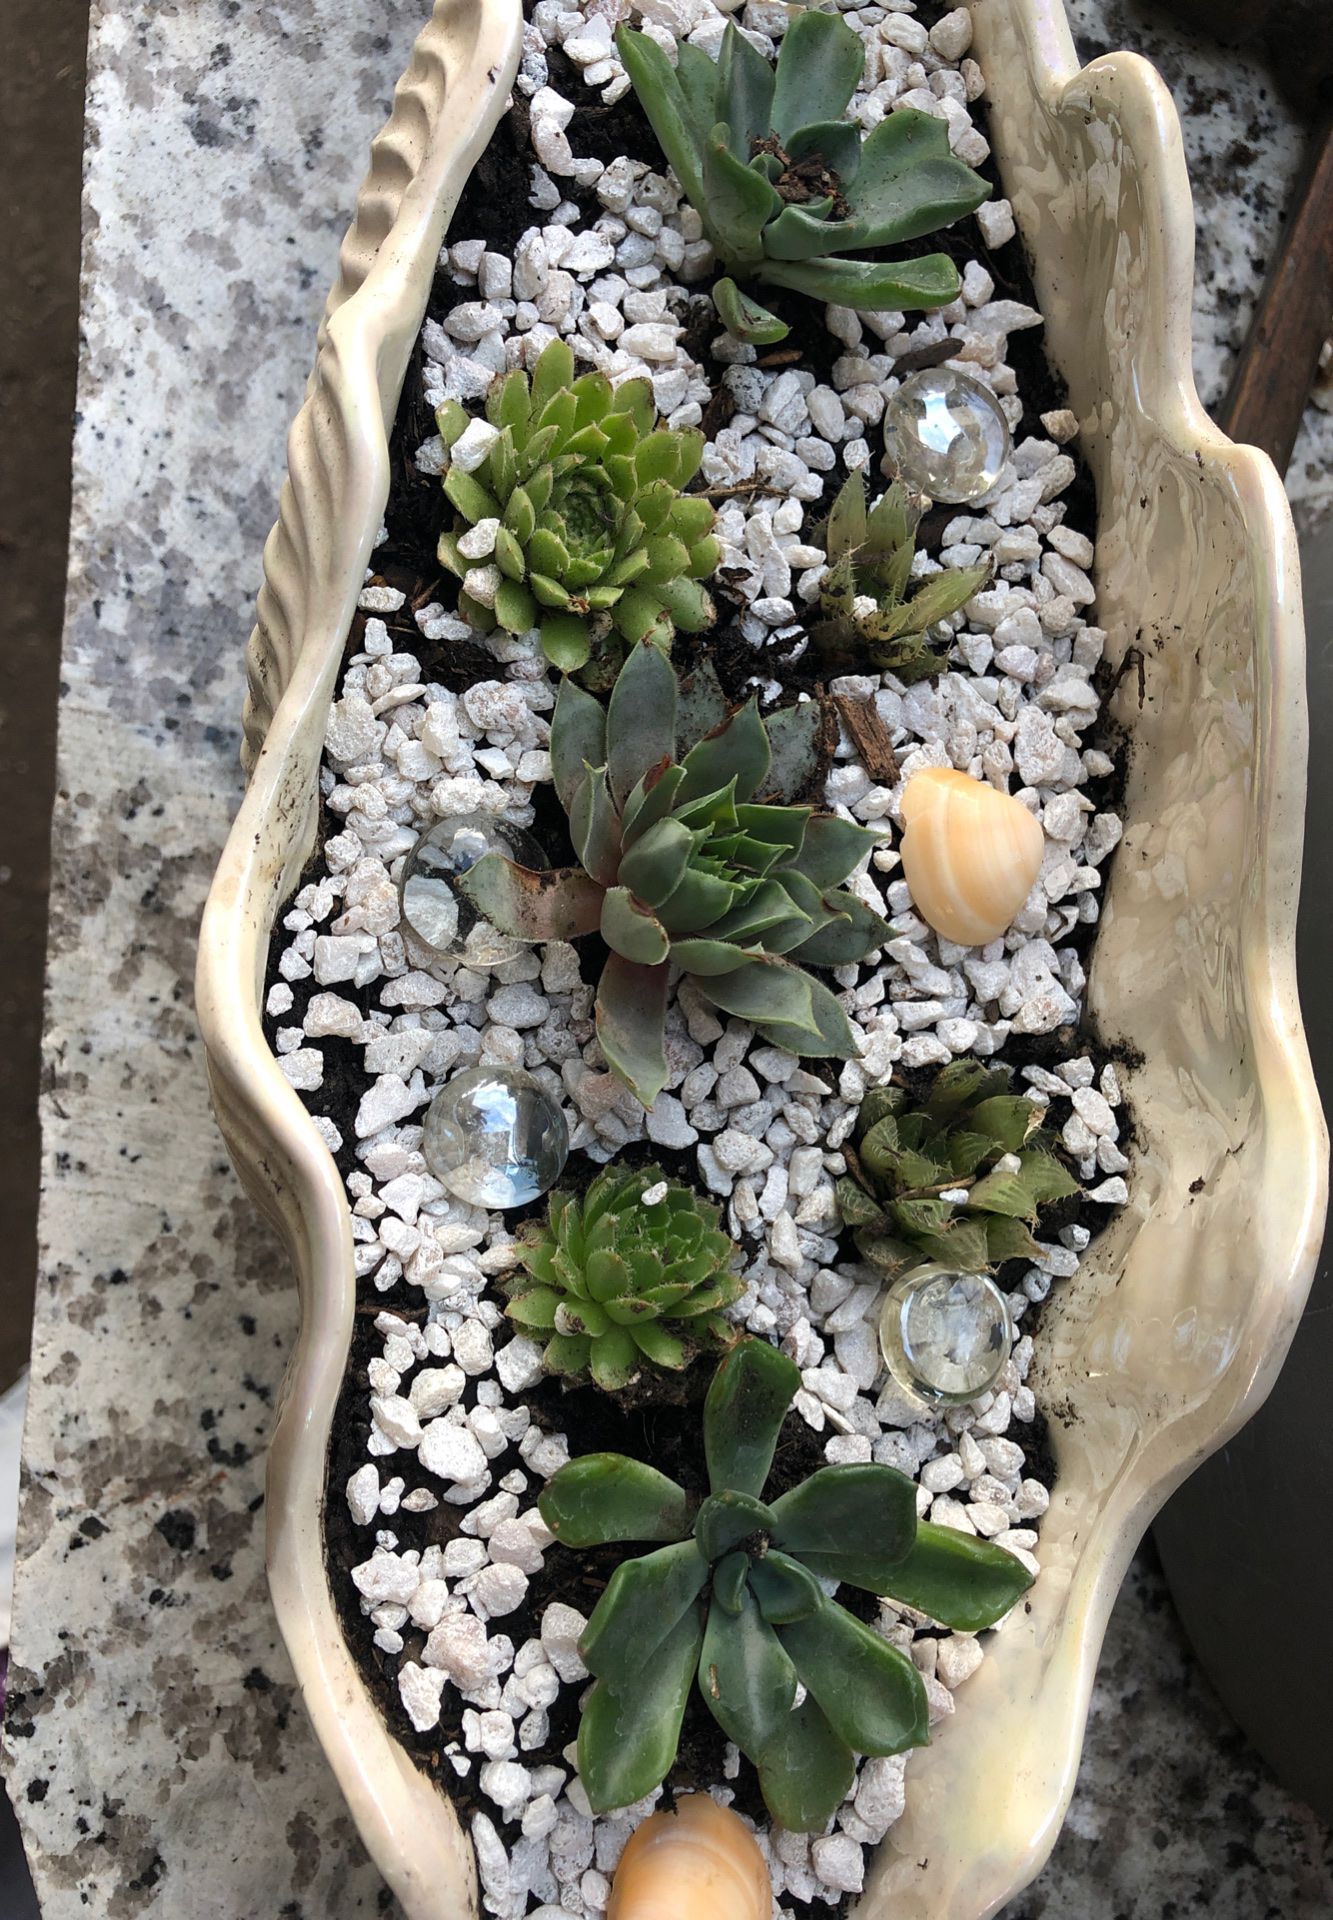 Succulent arrangement in ceramic PLANT SALE TODAY 19th OFFER UP PLANT SALE!!